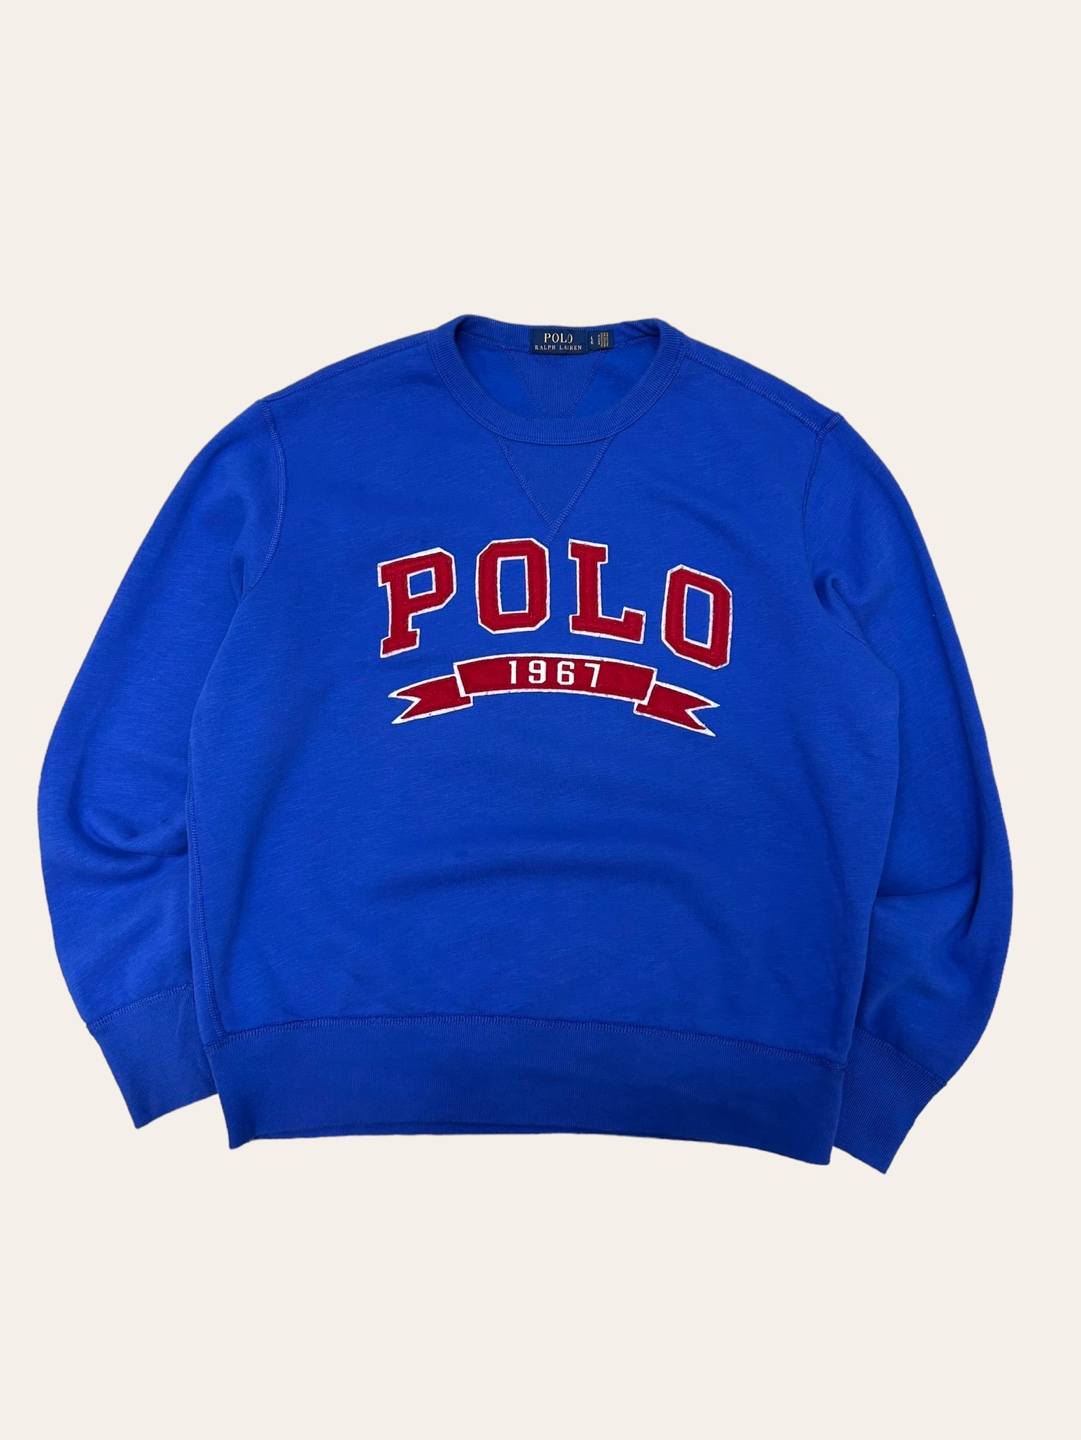 Polo ralph lauren blue spell out sweatshirt L